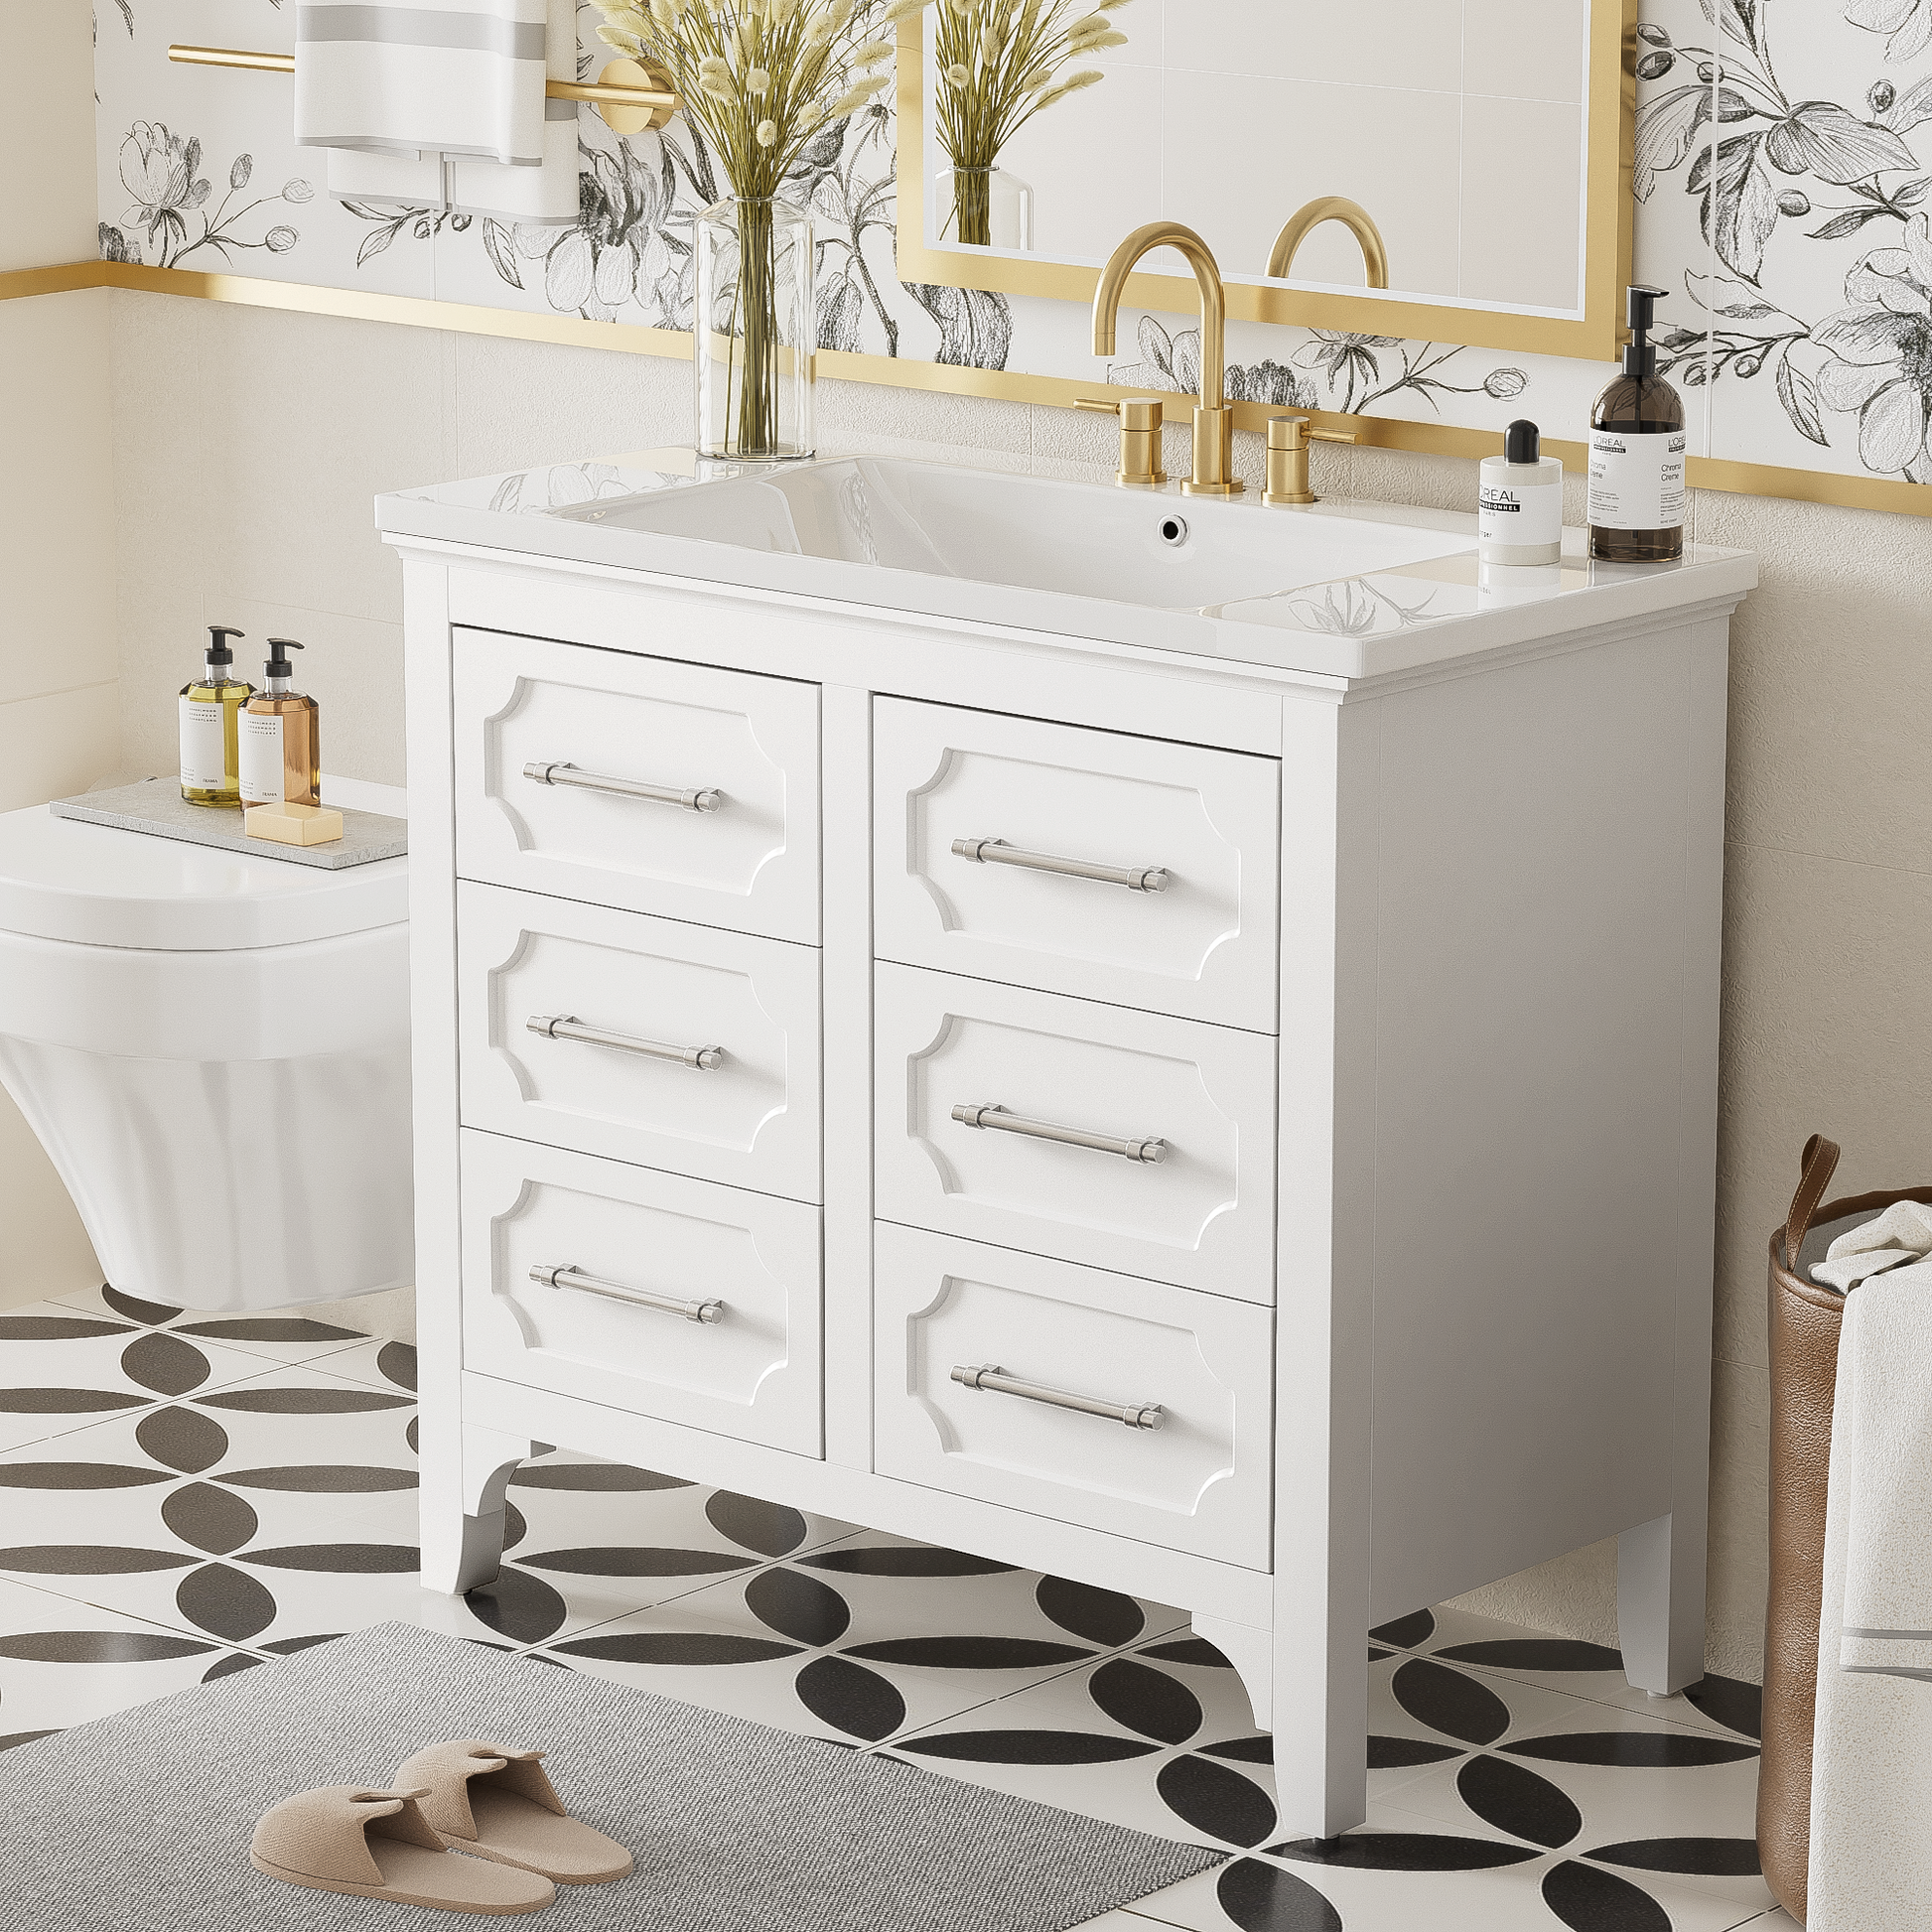 36'' Bathroom Vanity With Resin Sink Combo, Free